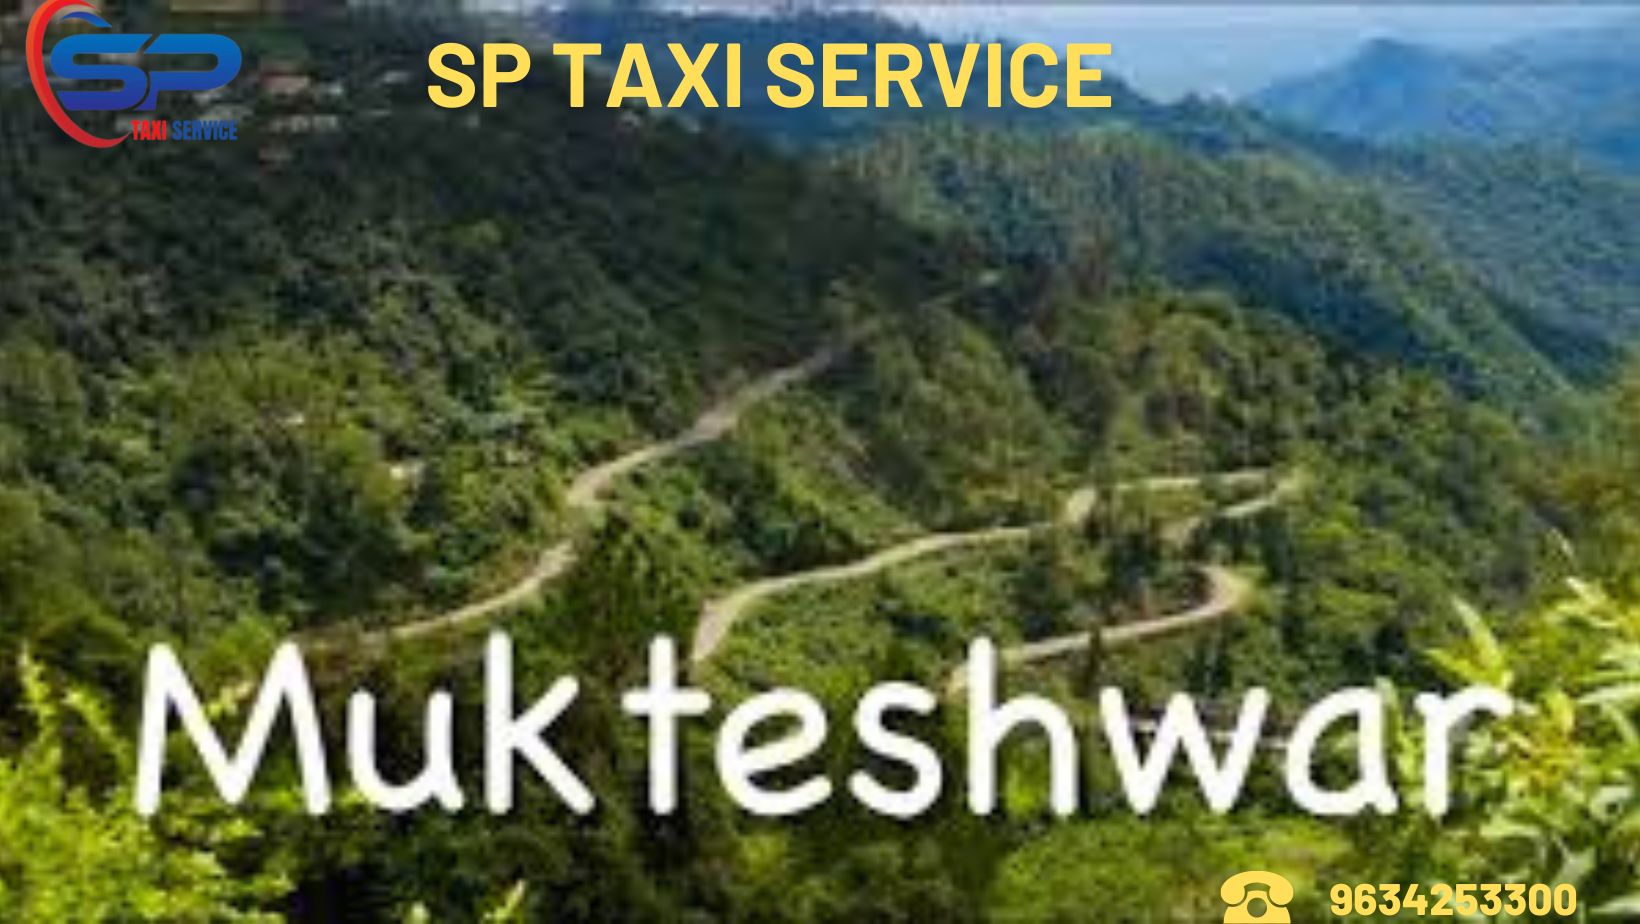 Mukteshwar Taxi service